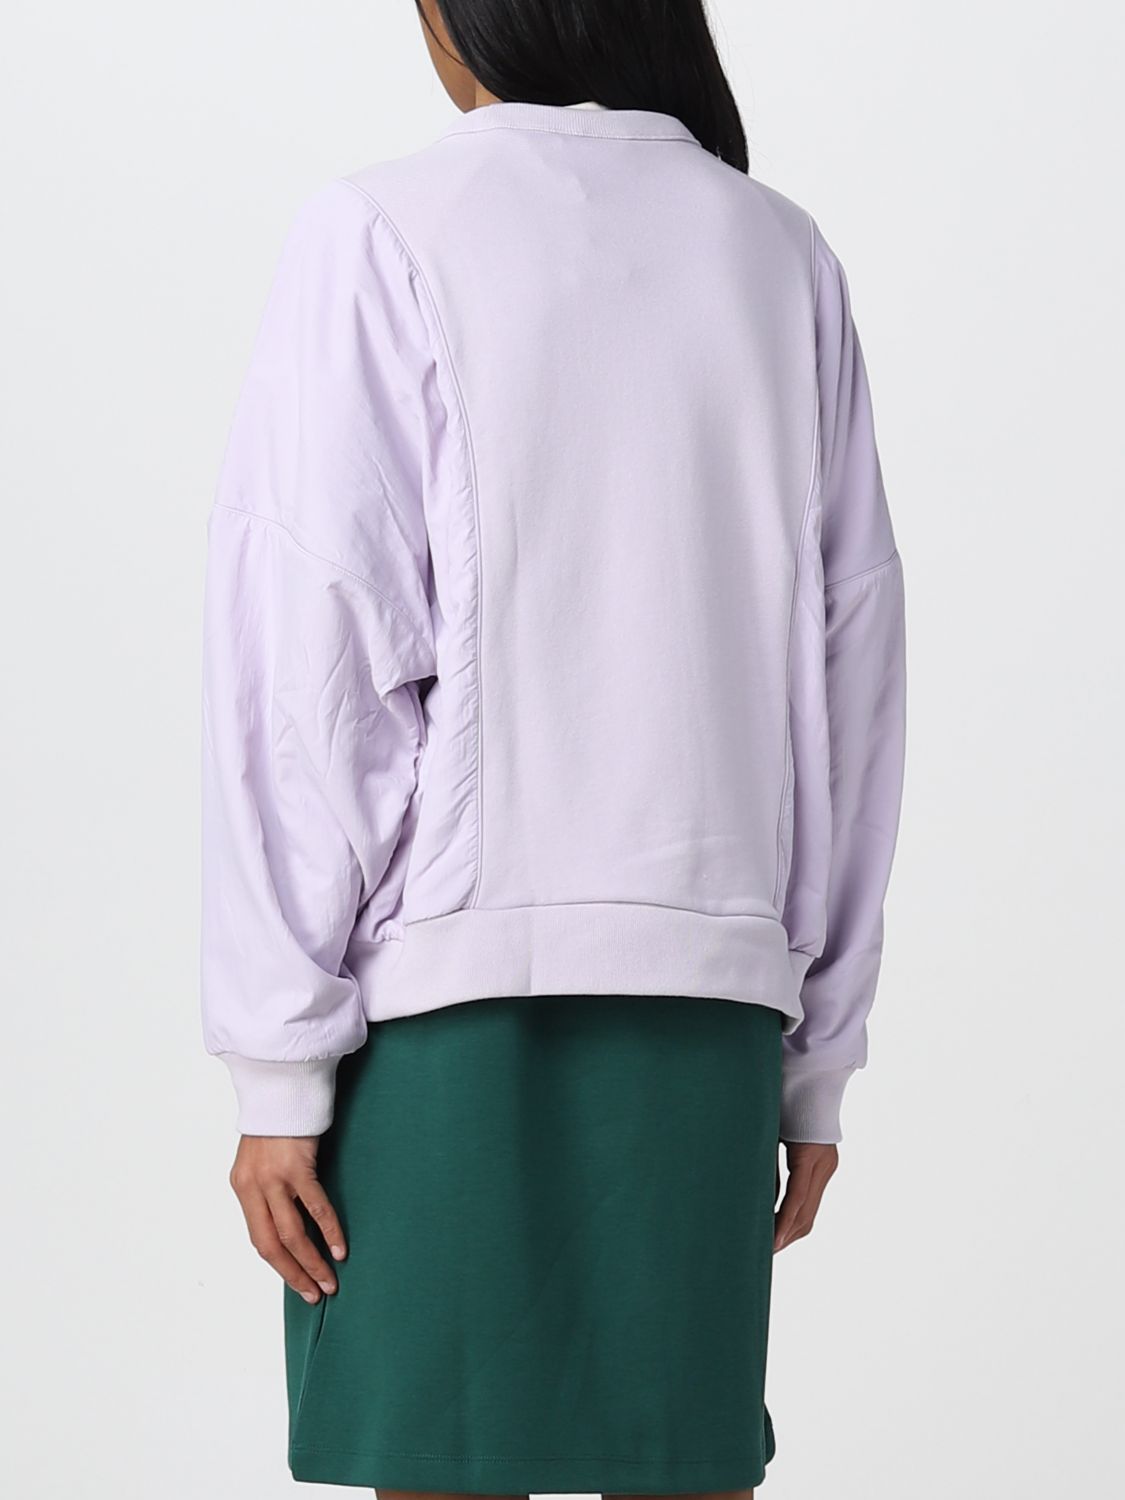 Sweatshirt Adidas Originals: Adidas Originals Damen Sweatshirt violett 2